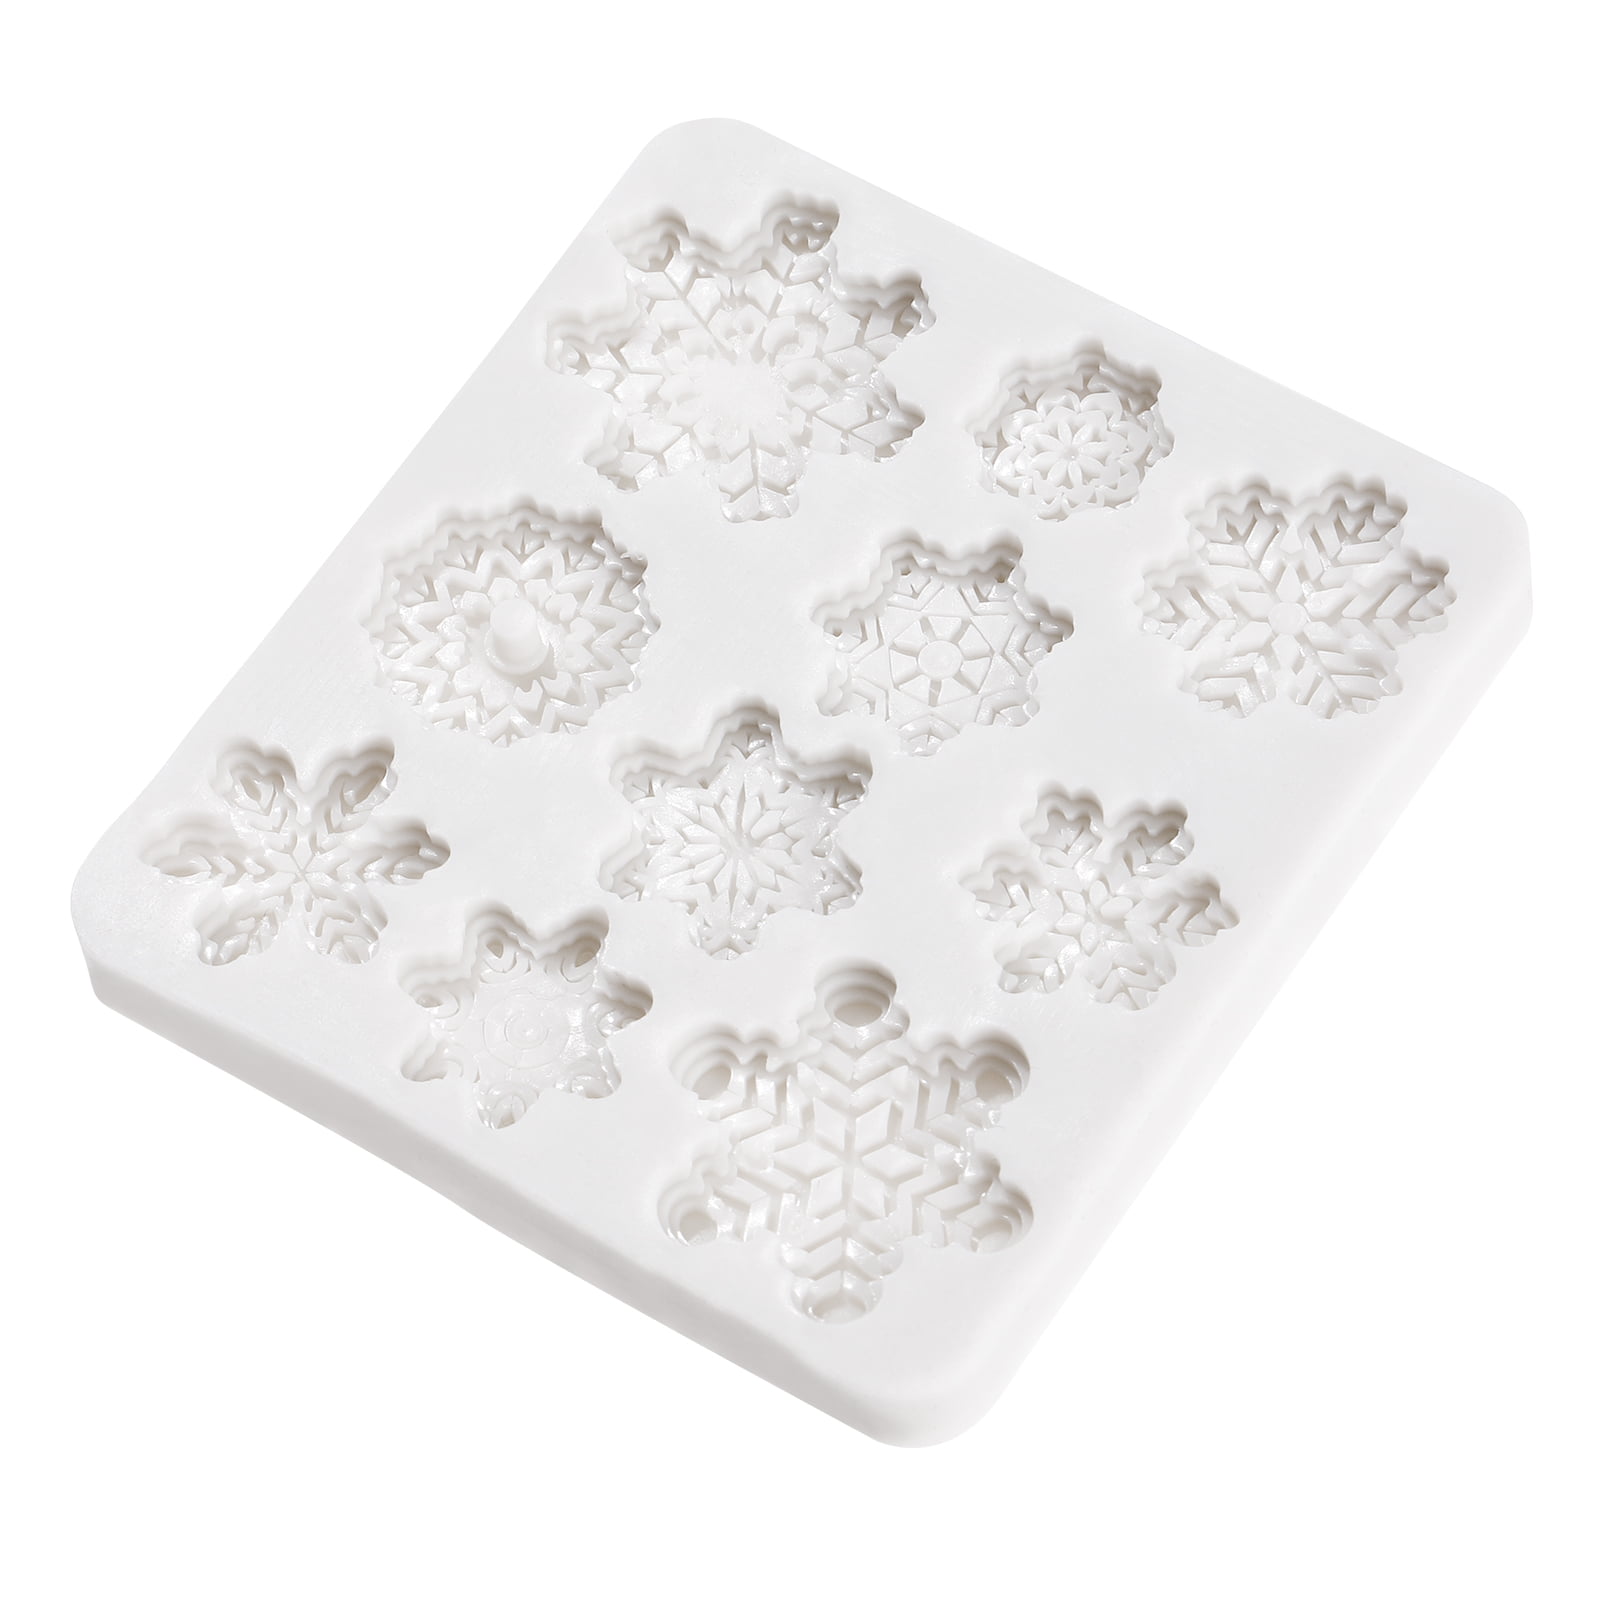 Snowflake Mold – Bella's Details Shop